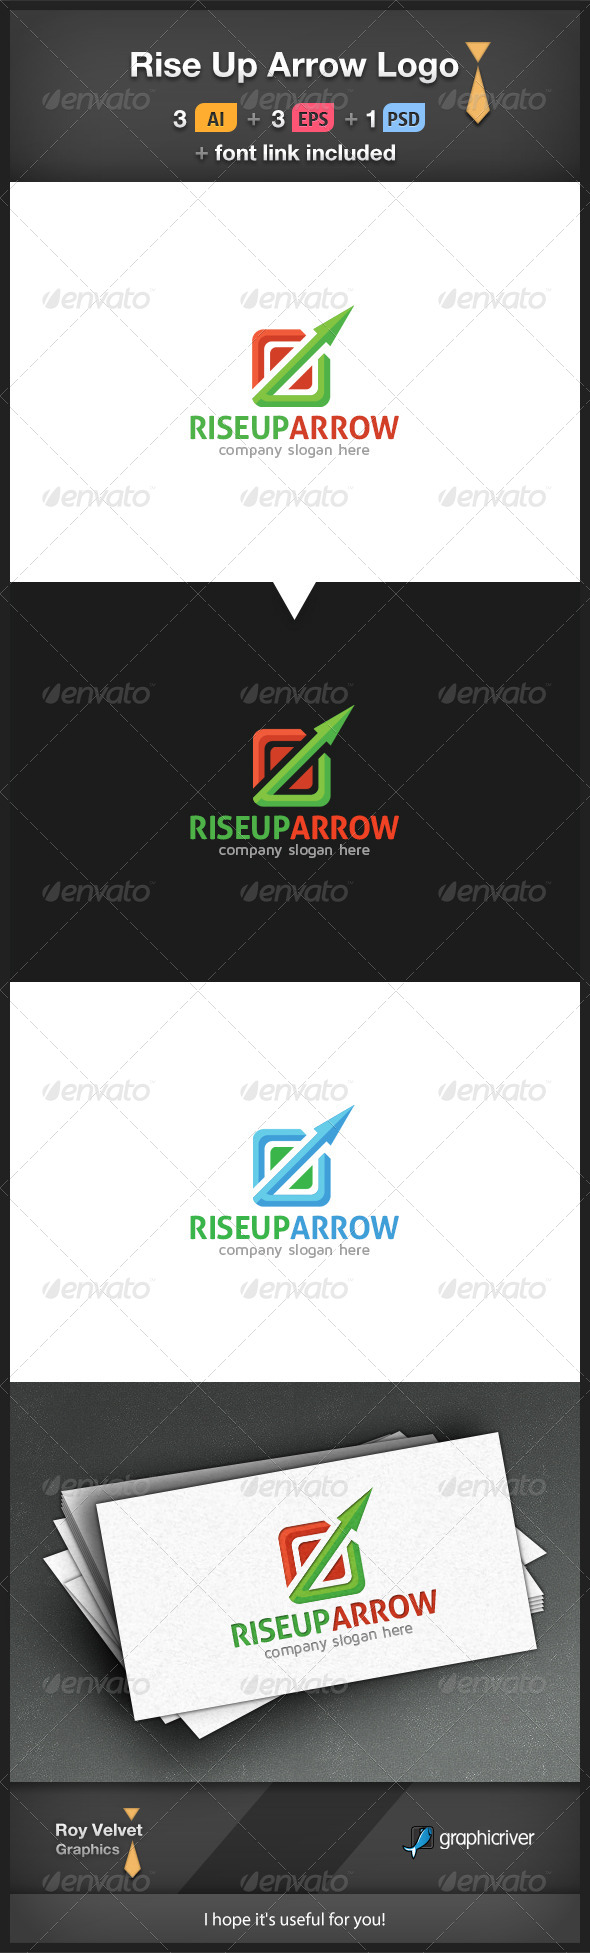 Rise Up Arrow Logo